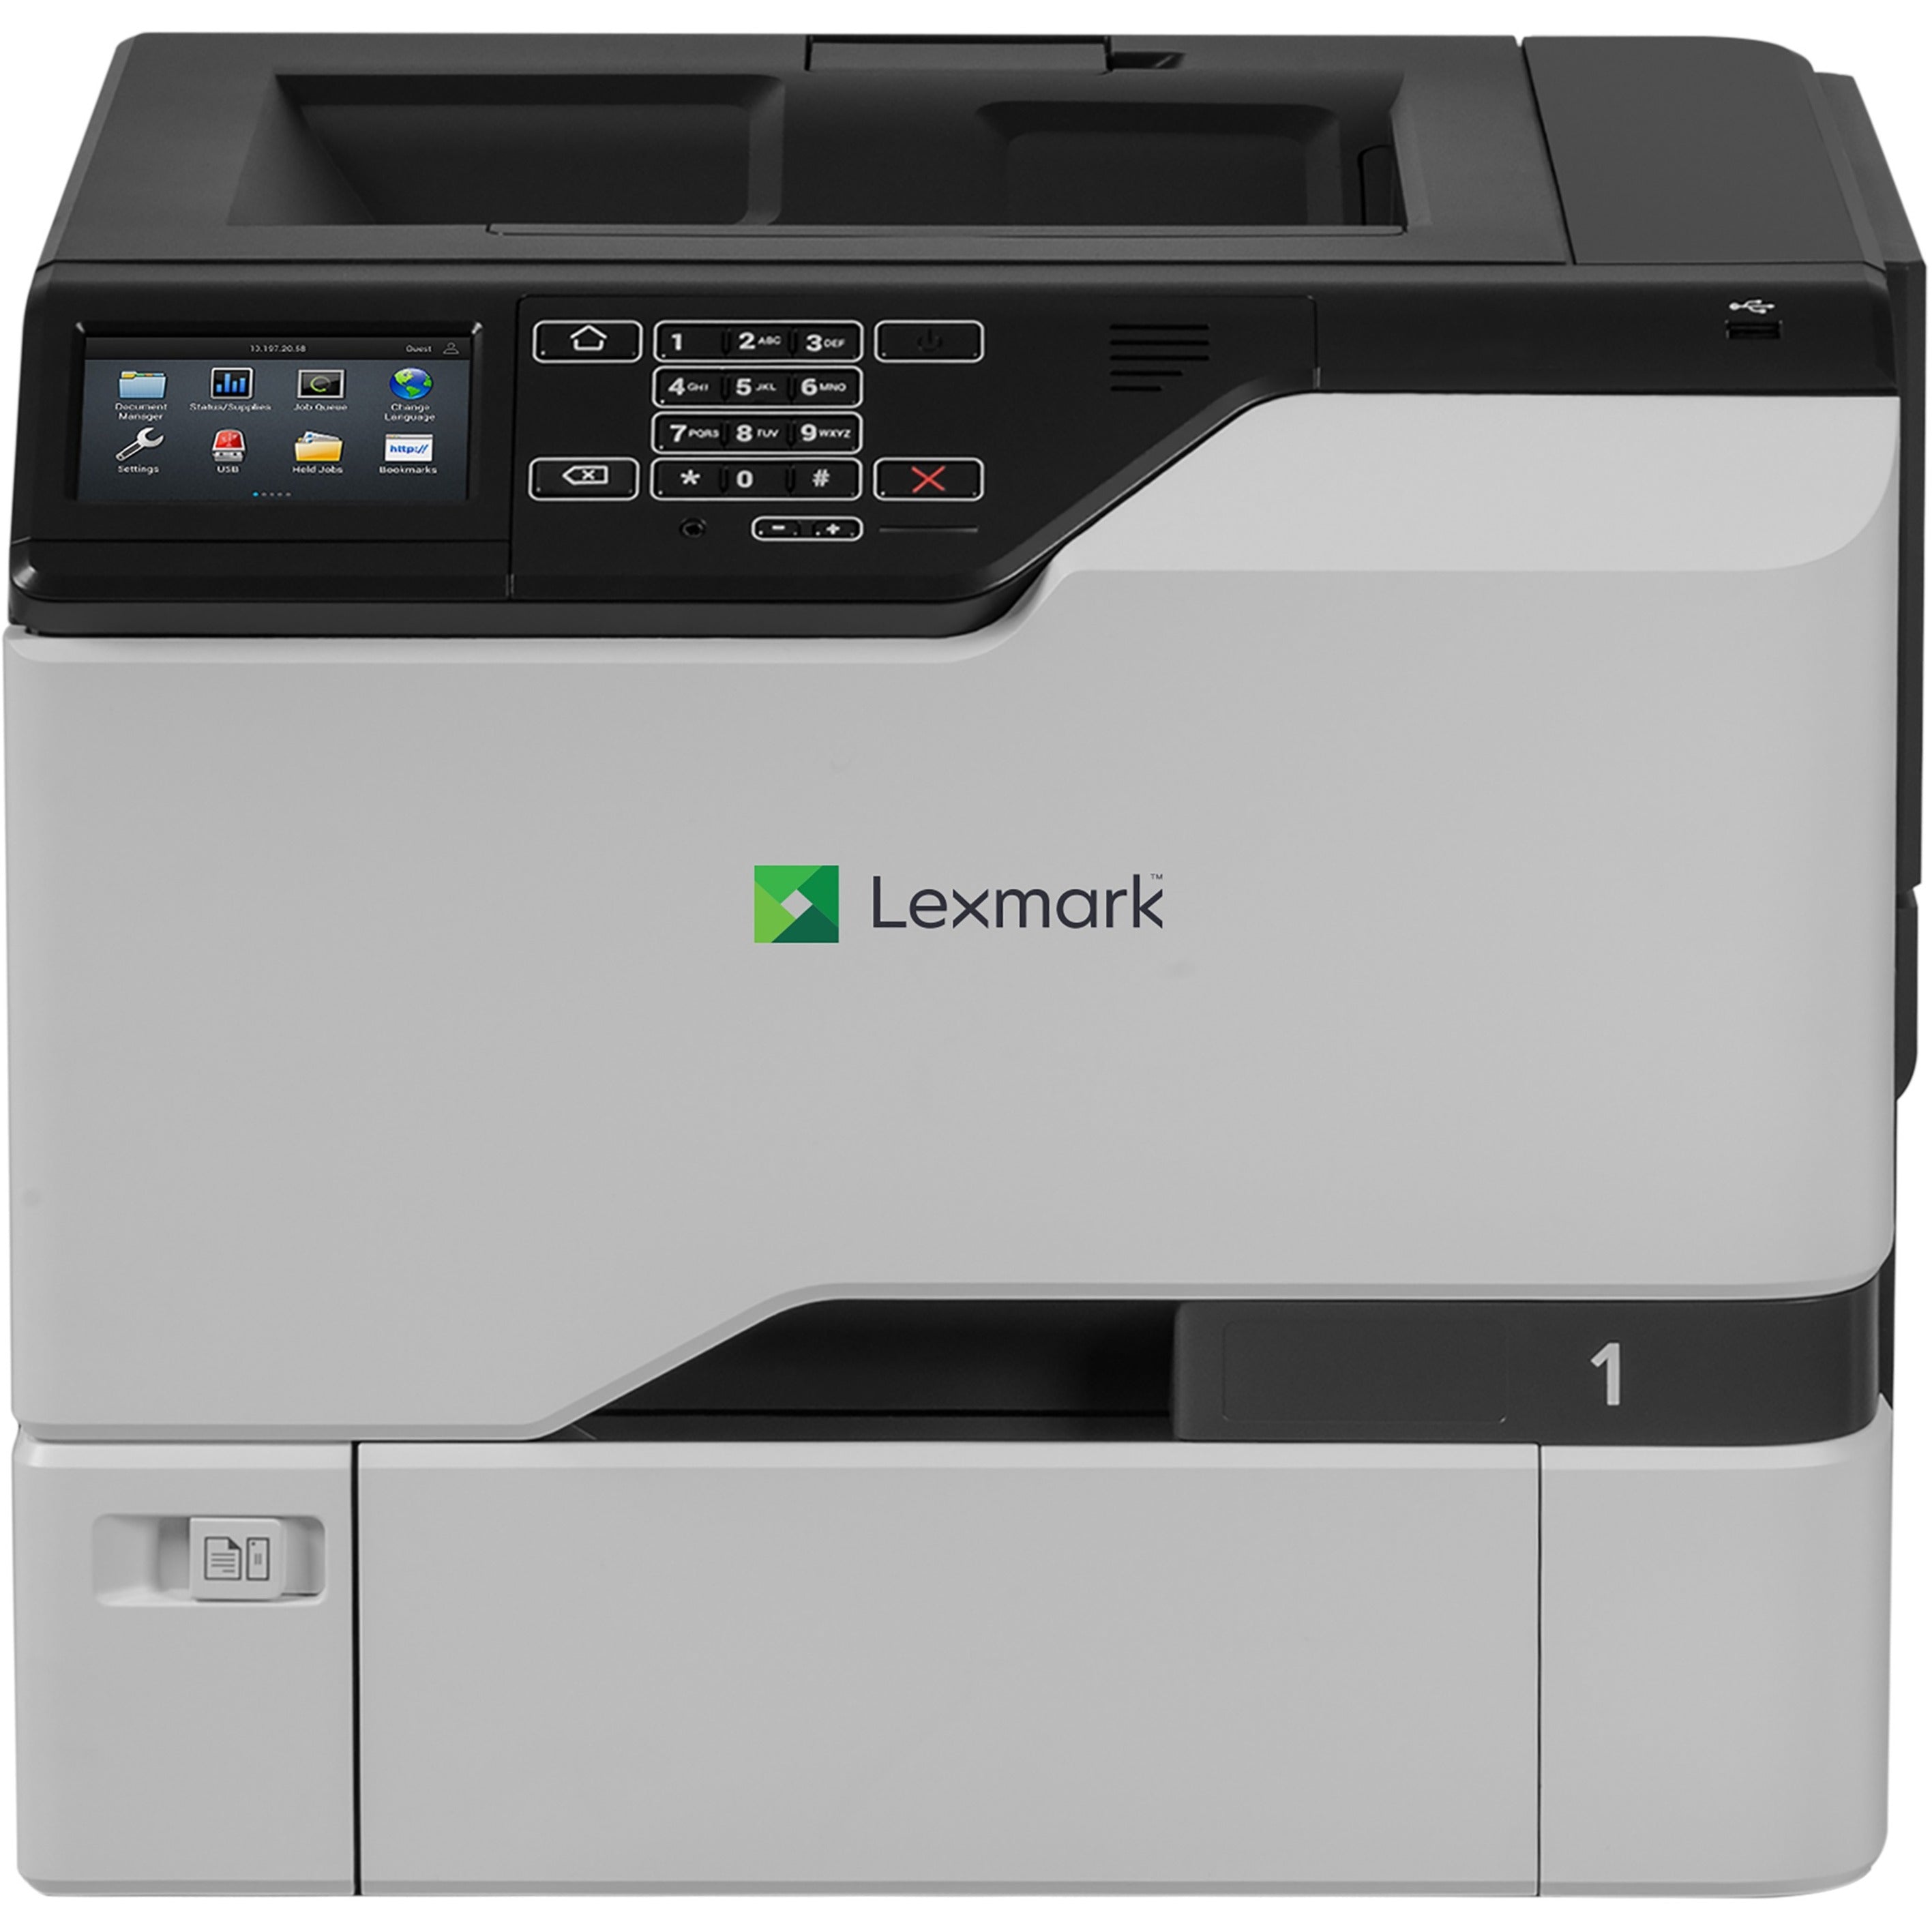 Lexmark 40CT018 CS725de Color Laser Printer, Automatic Duplex Printing, 50 ppm, 2400 x 600 dpi